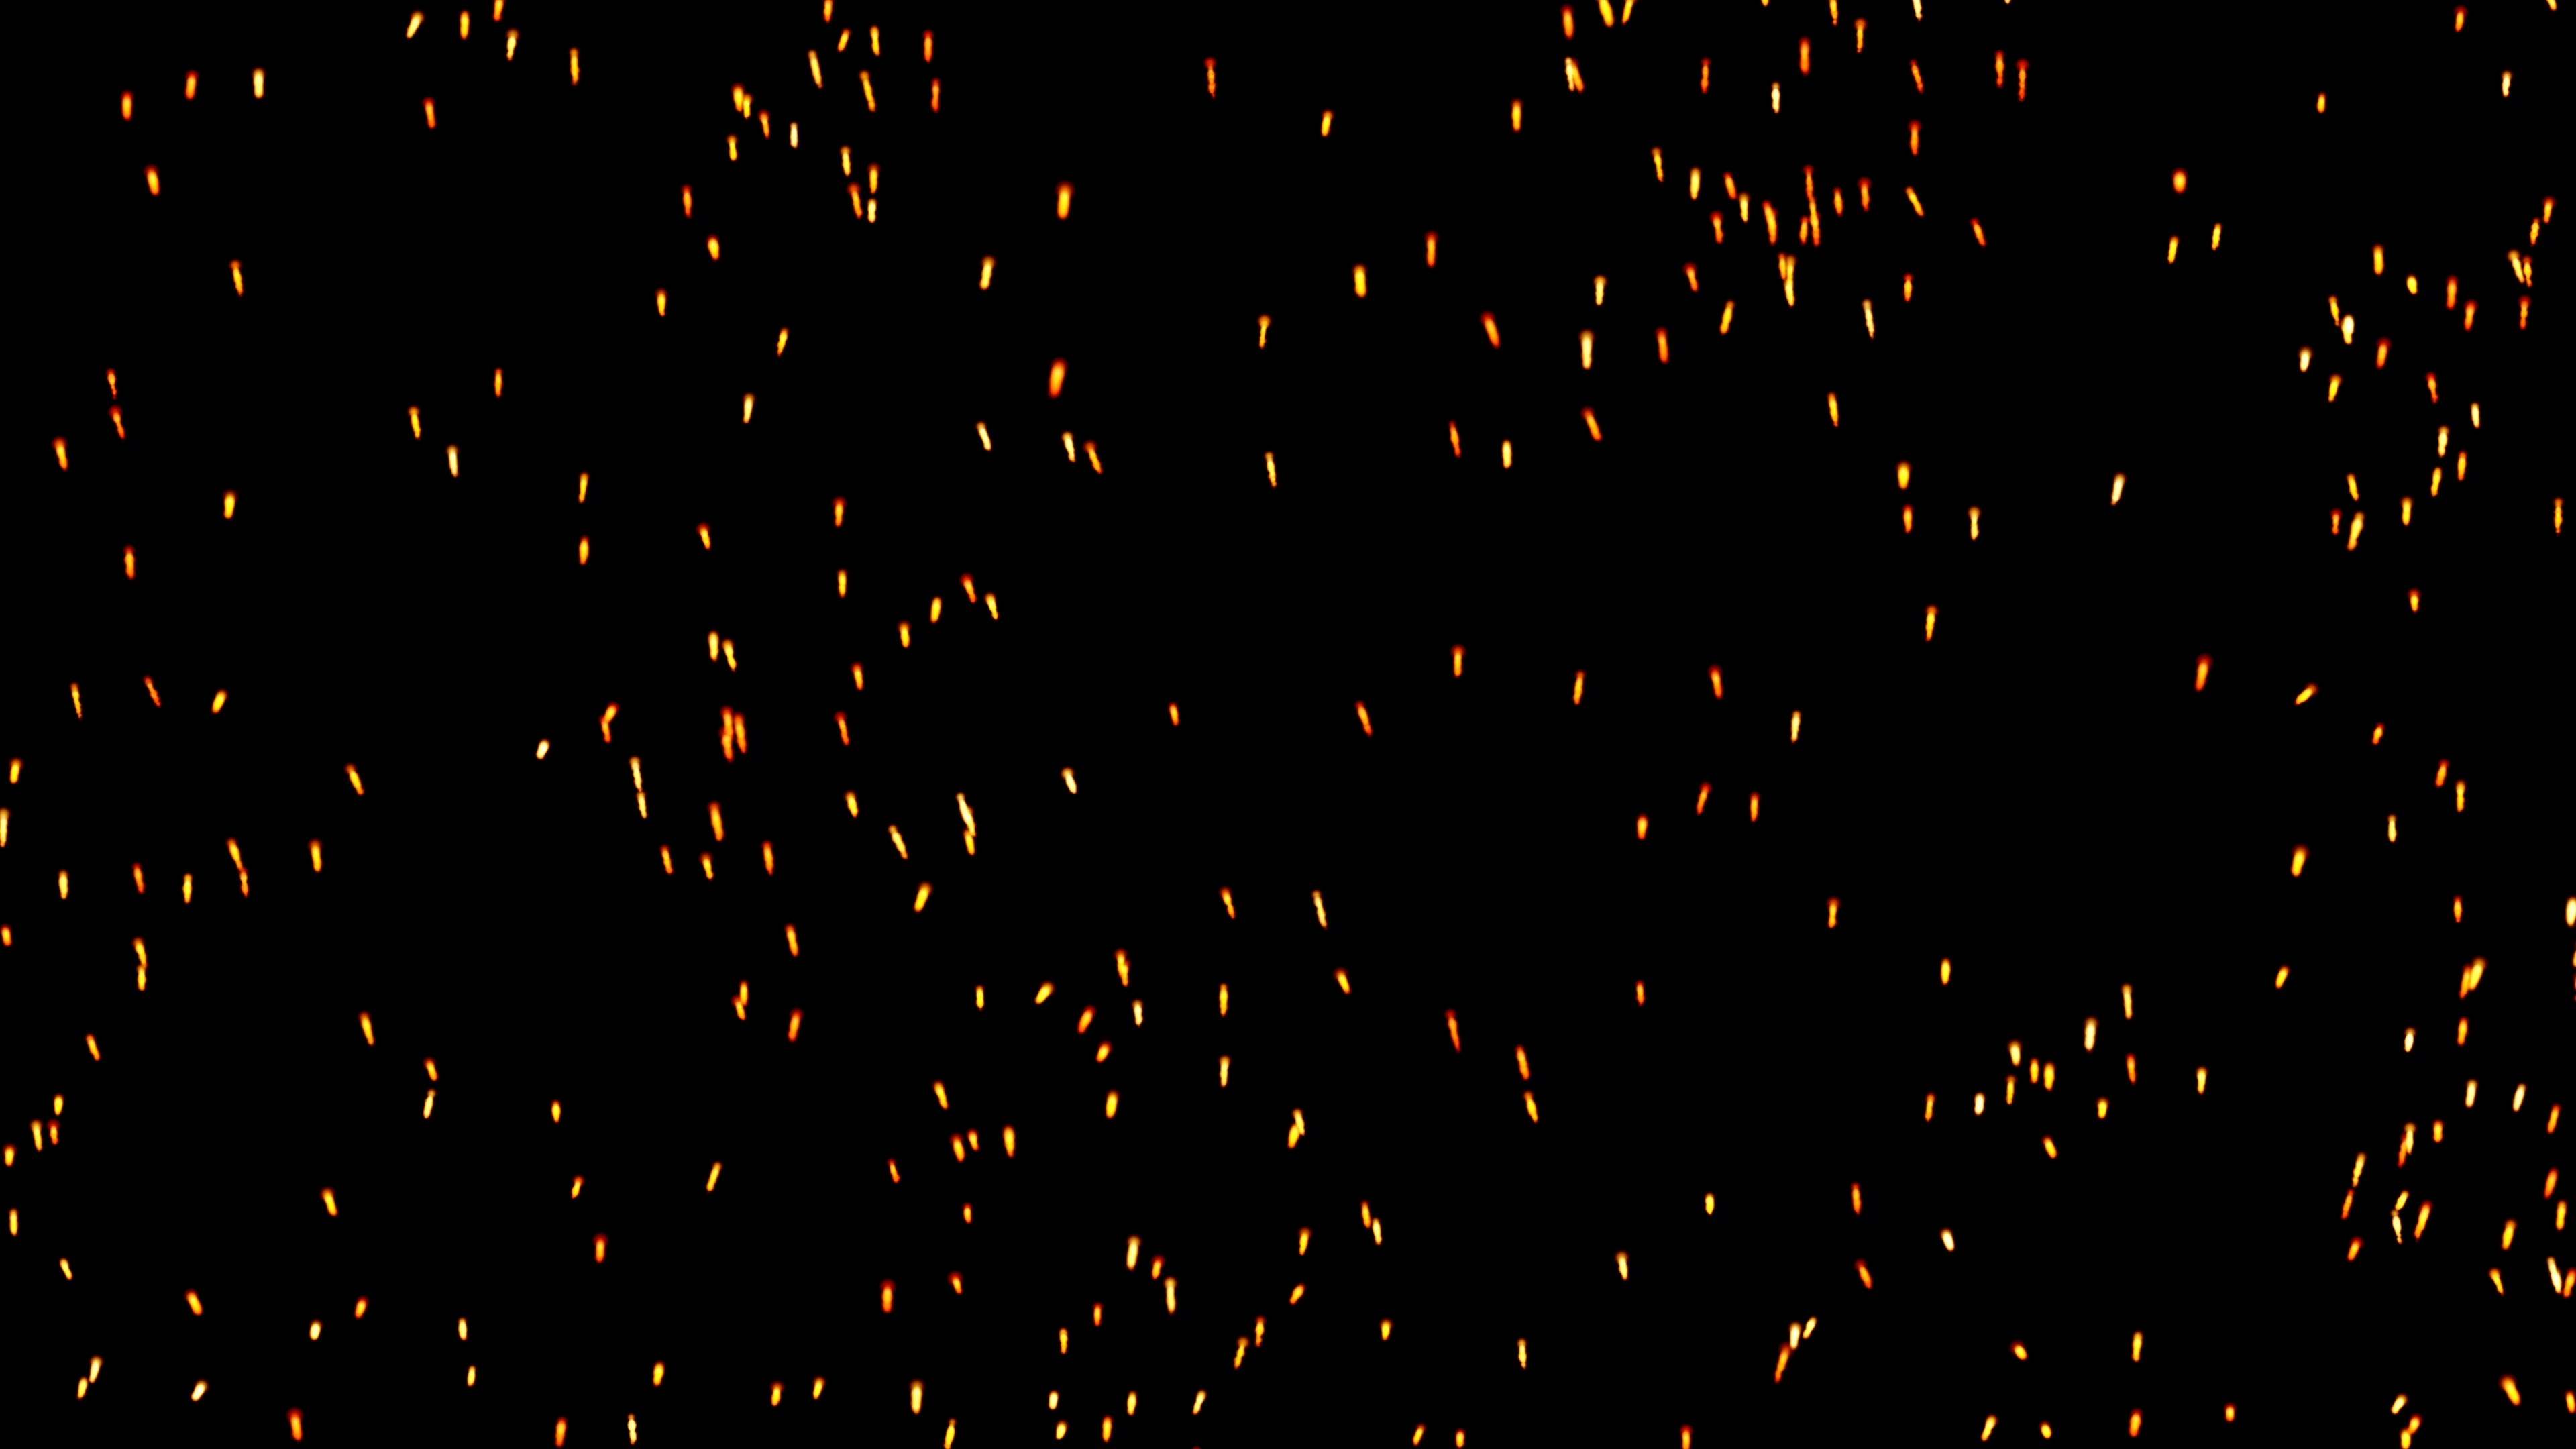 Sparks on Black Screen Backgroud.jpg